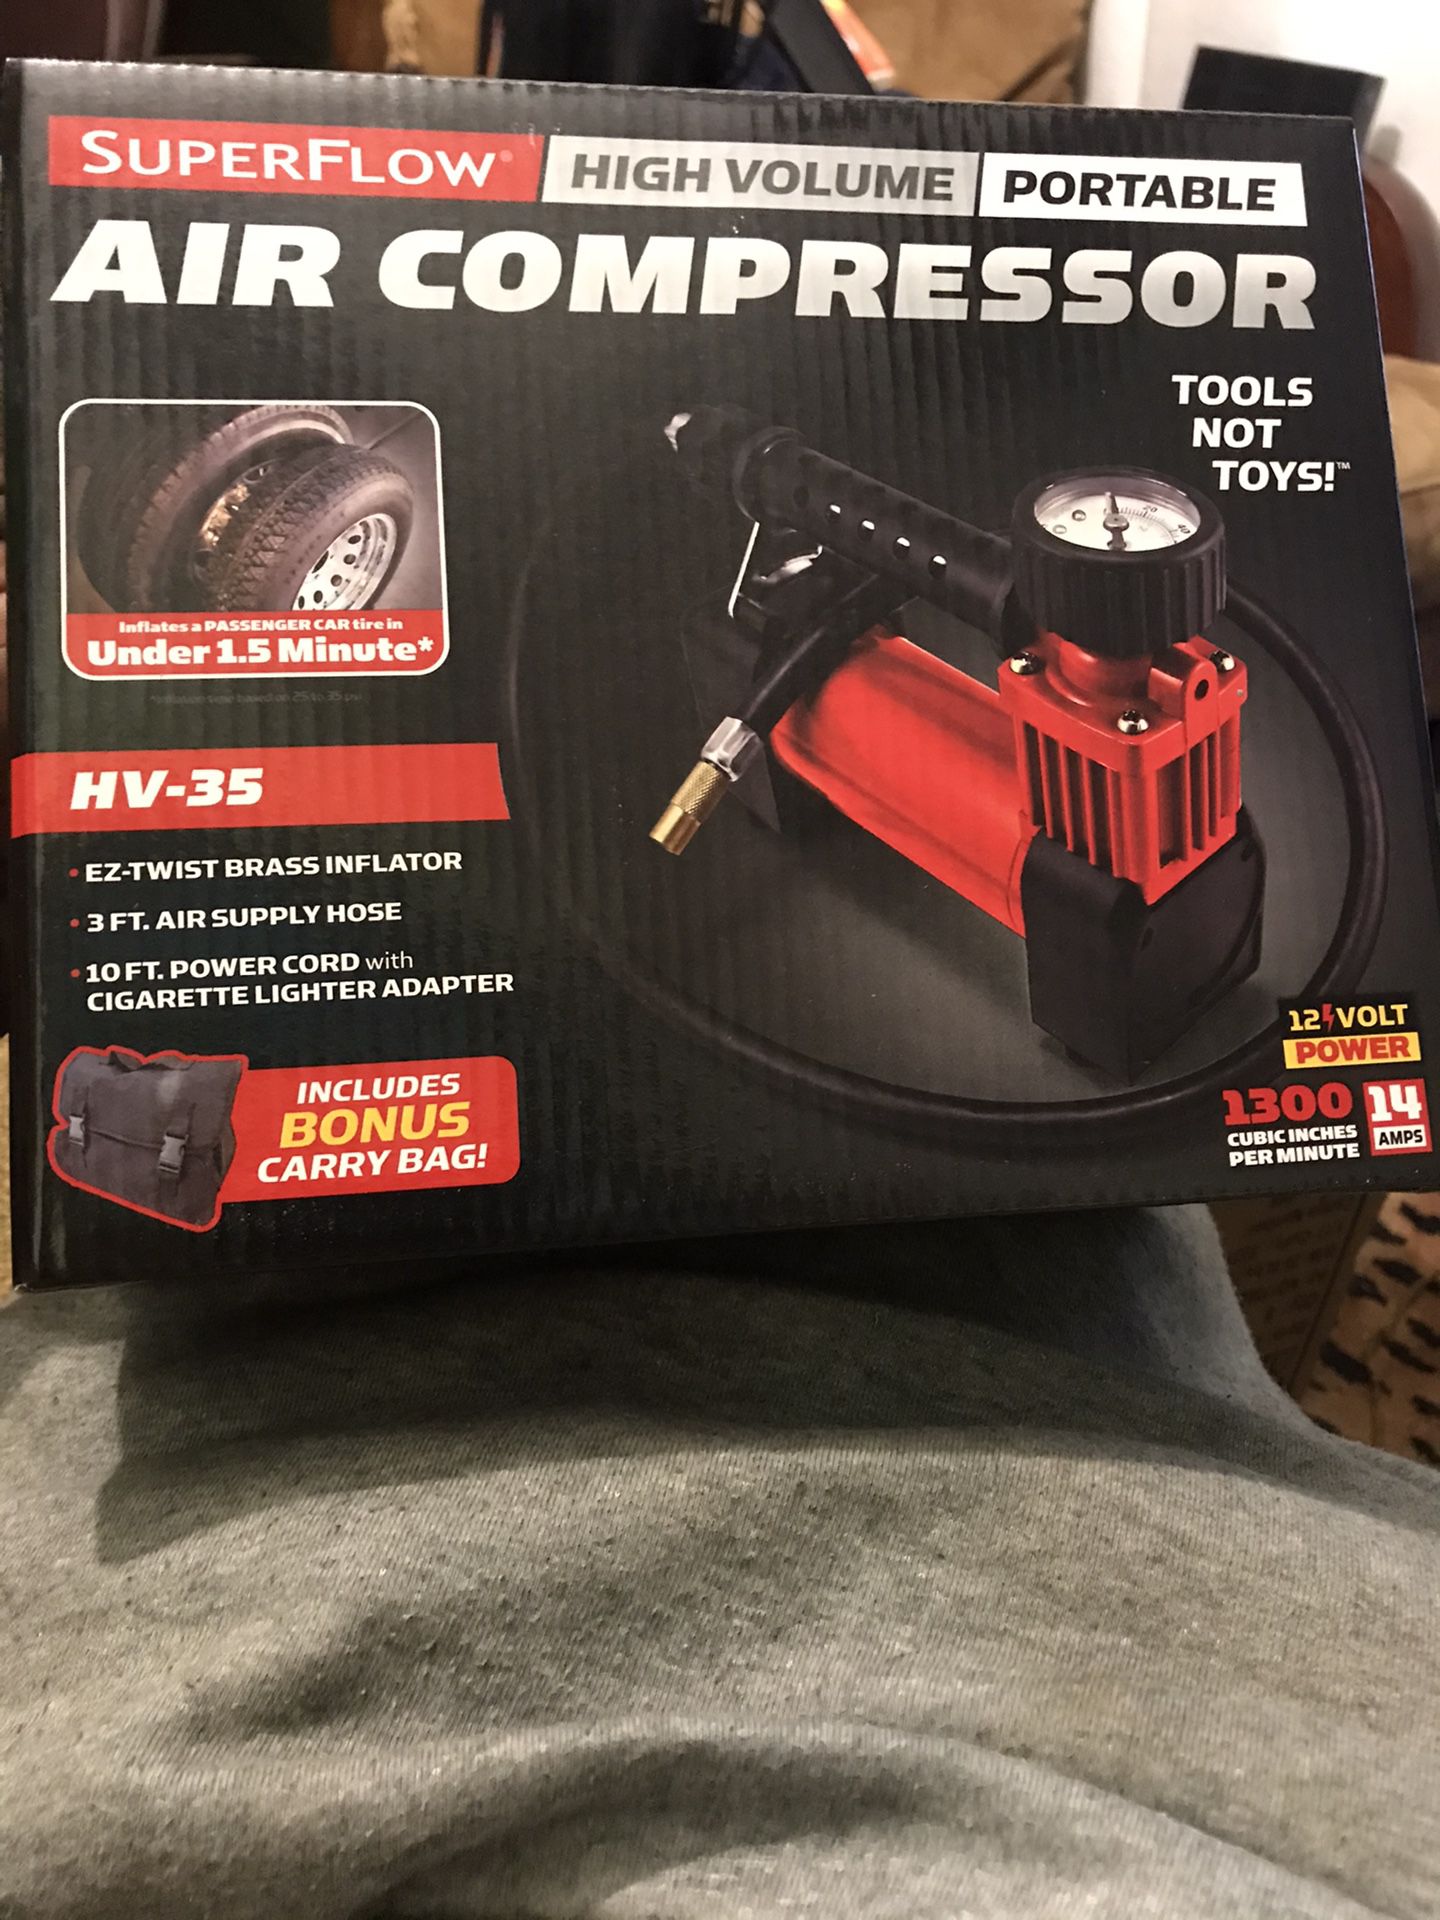 Superflow air compressor HV-35